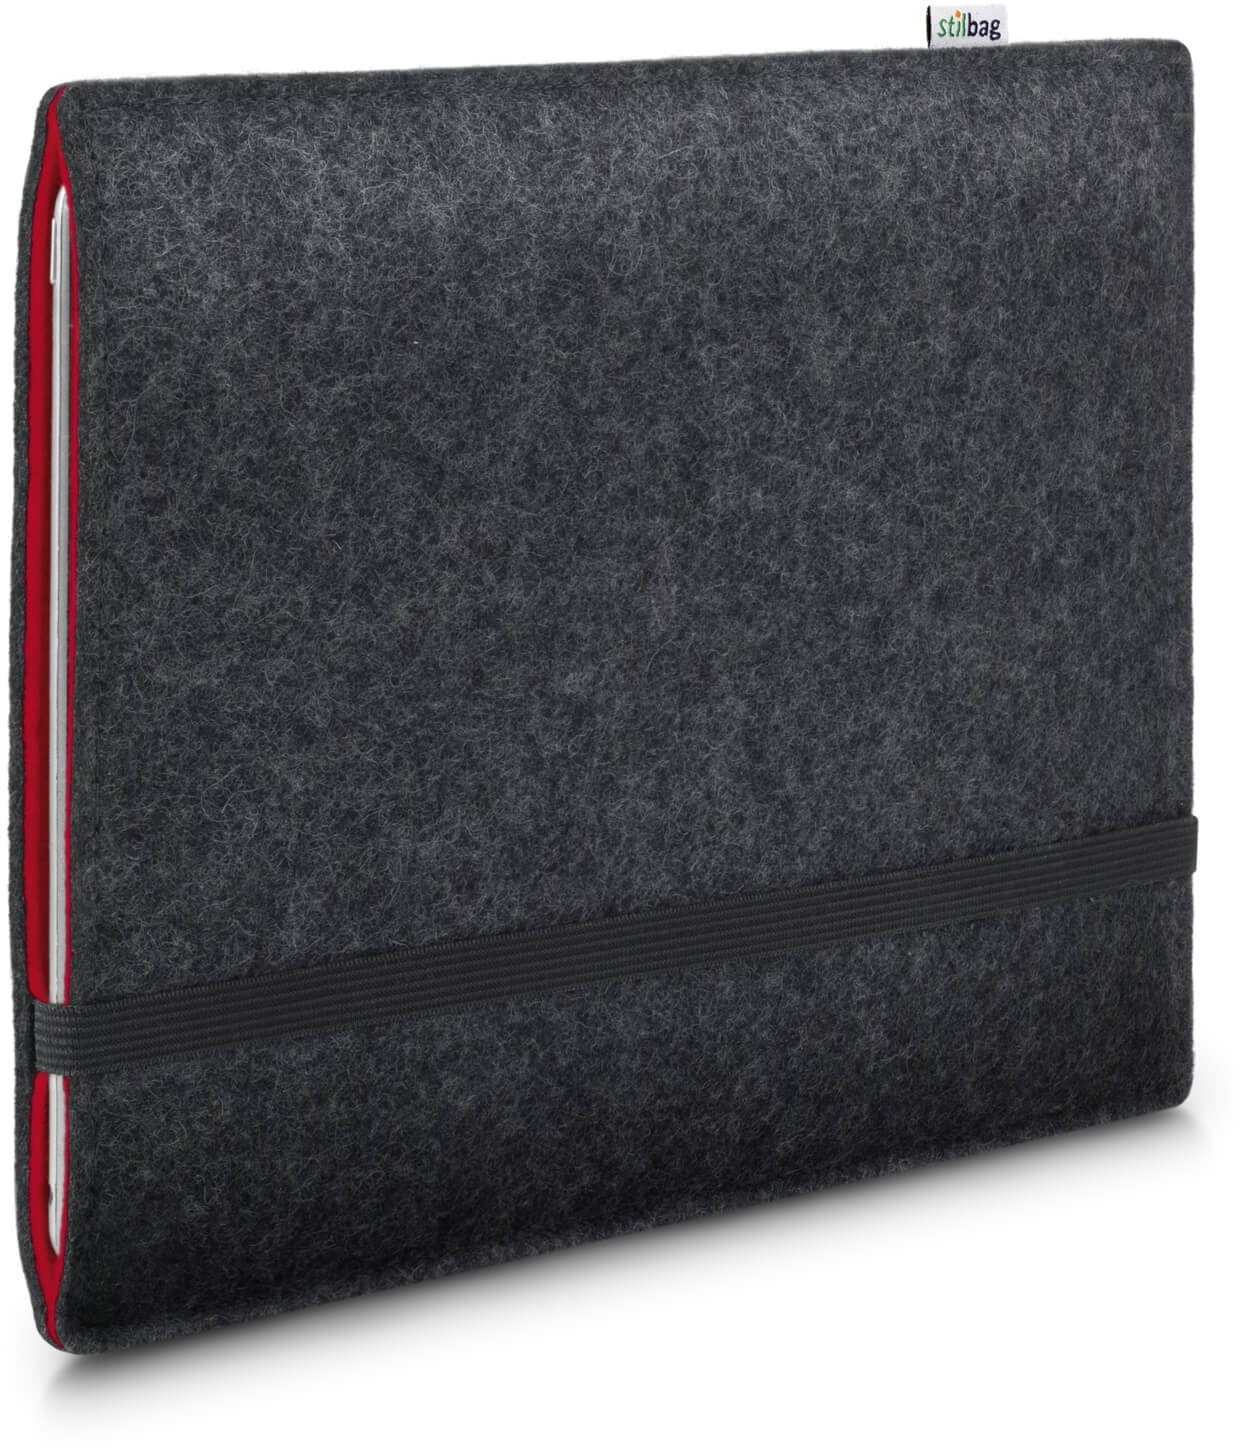 Stilbag Filzhülle für Apple iPad Air (2022) | Etui Tasche aus Merino Wollfilz | Kollekion Finn - Farbe: anthrazit/rot | Tablet Schutzhülle Made in Germany